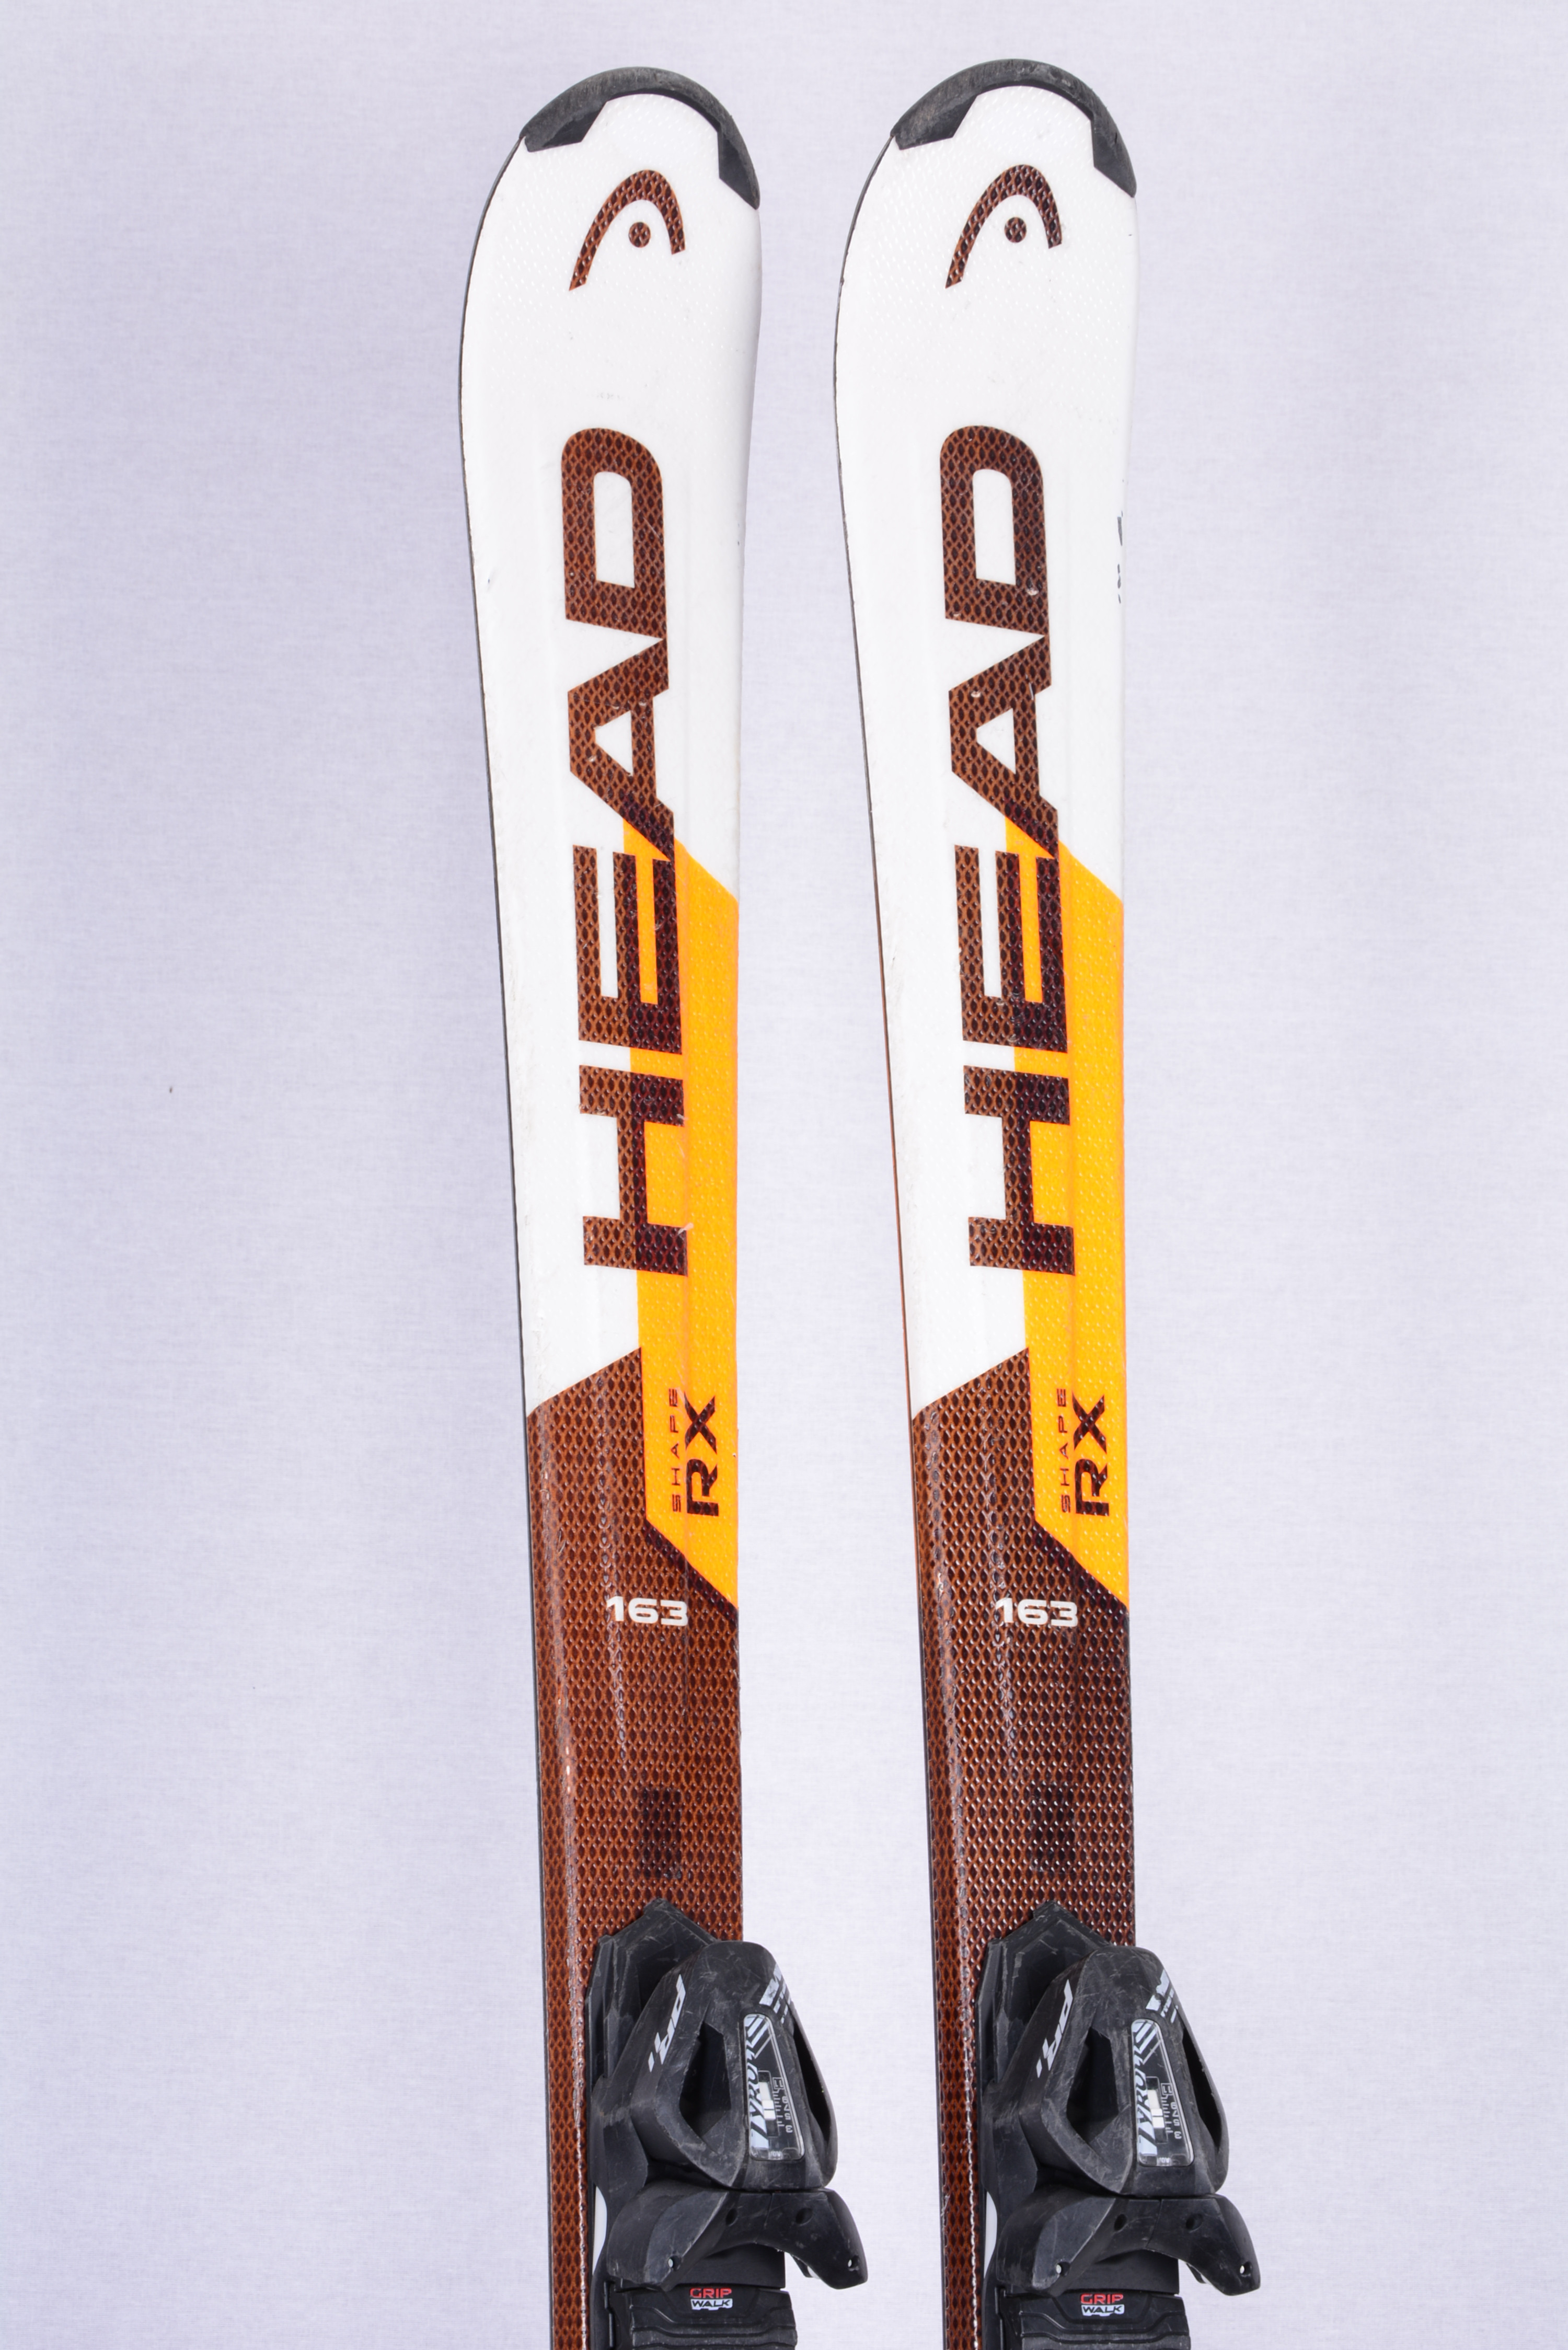 skis HEAD SHAPE RX 2020, orange/white, grip walk + Tyrolia PR 11 